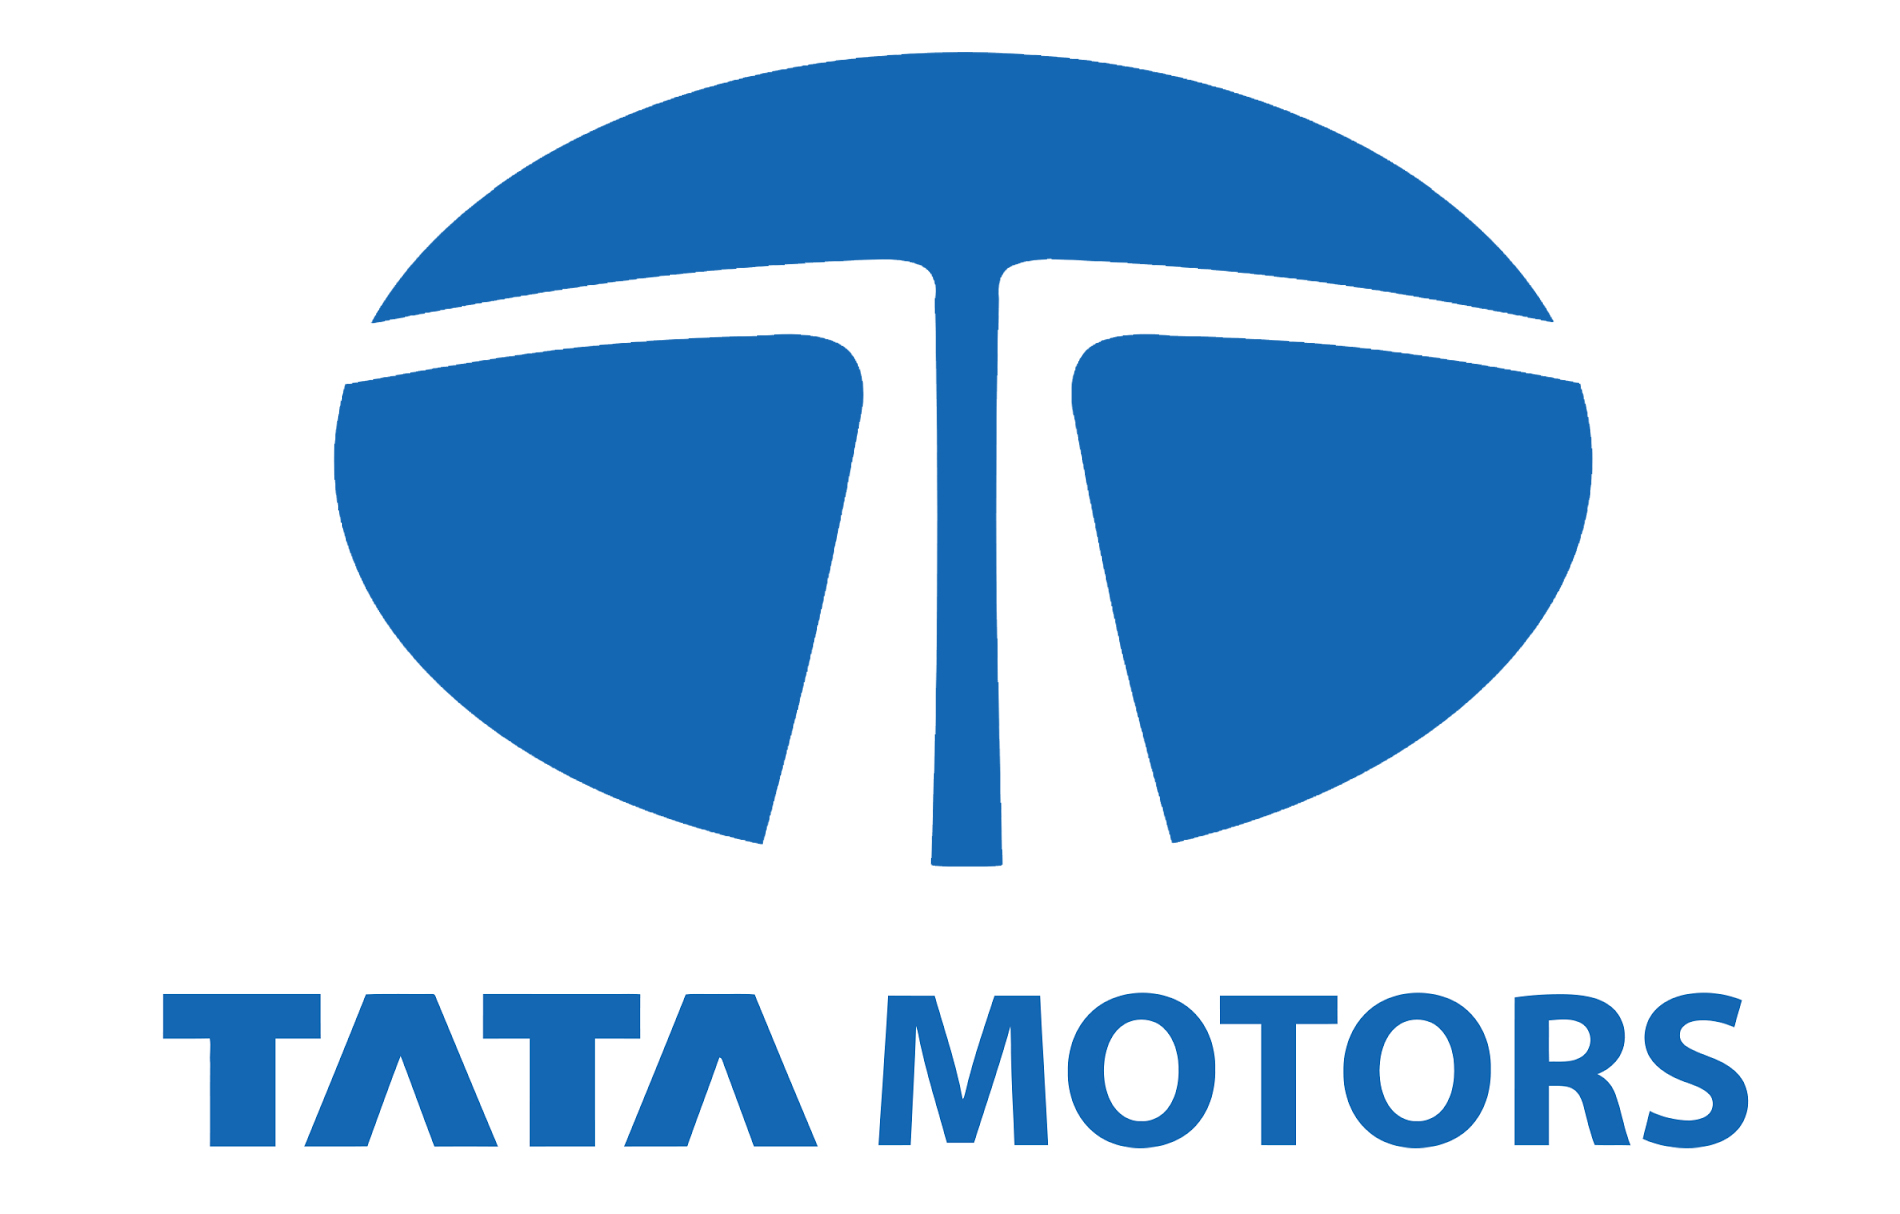 Tata Motors Cars Showroom and Workshop - The True Sai Works Logo